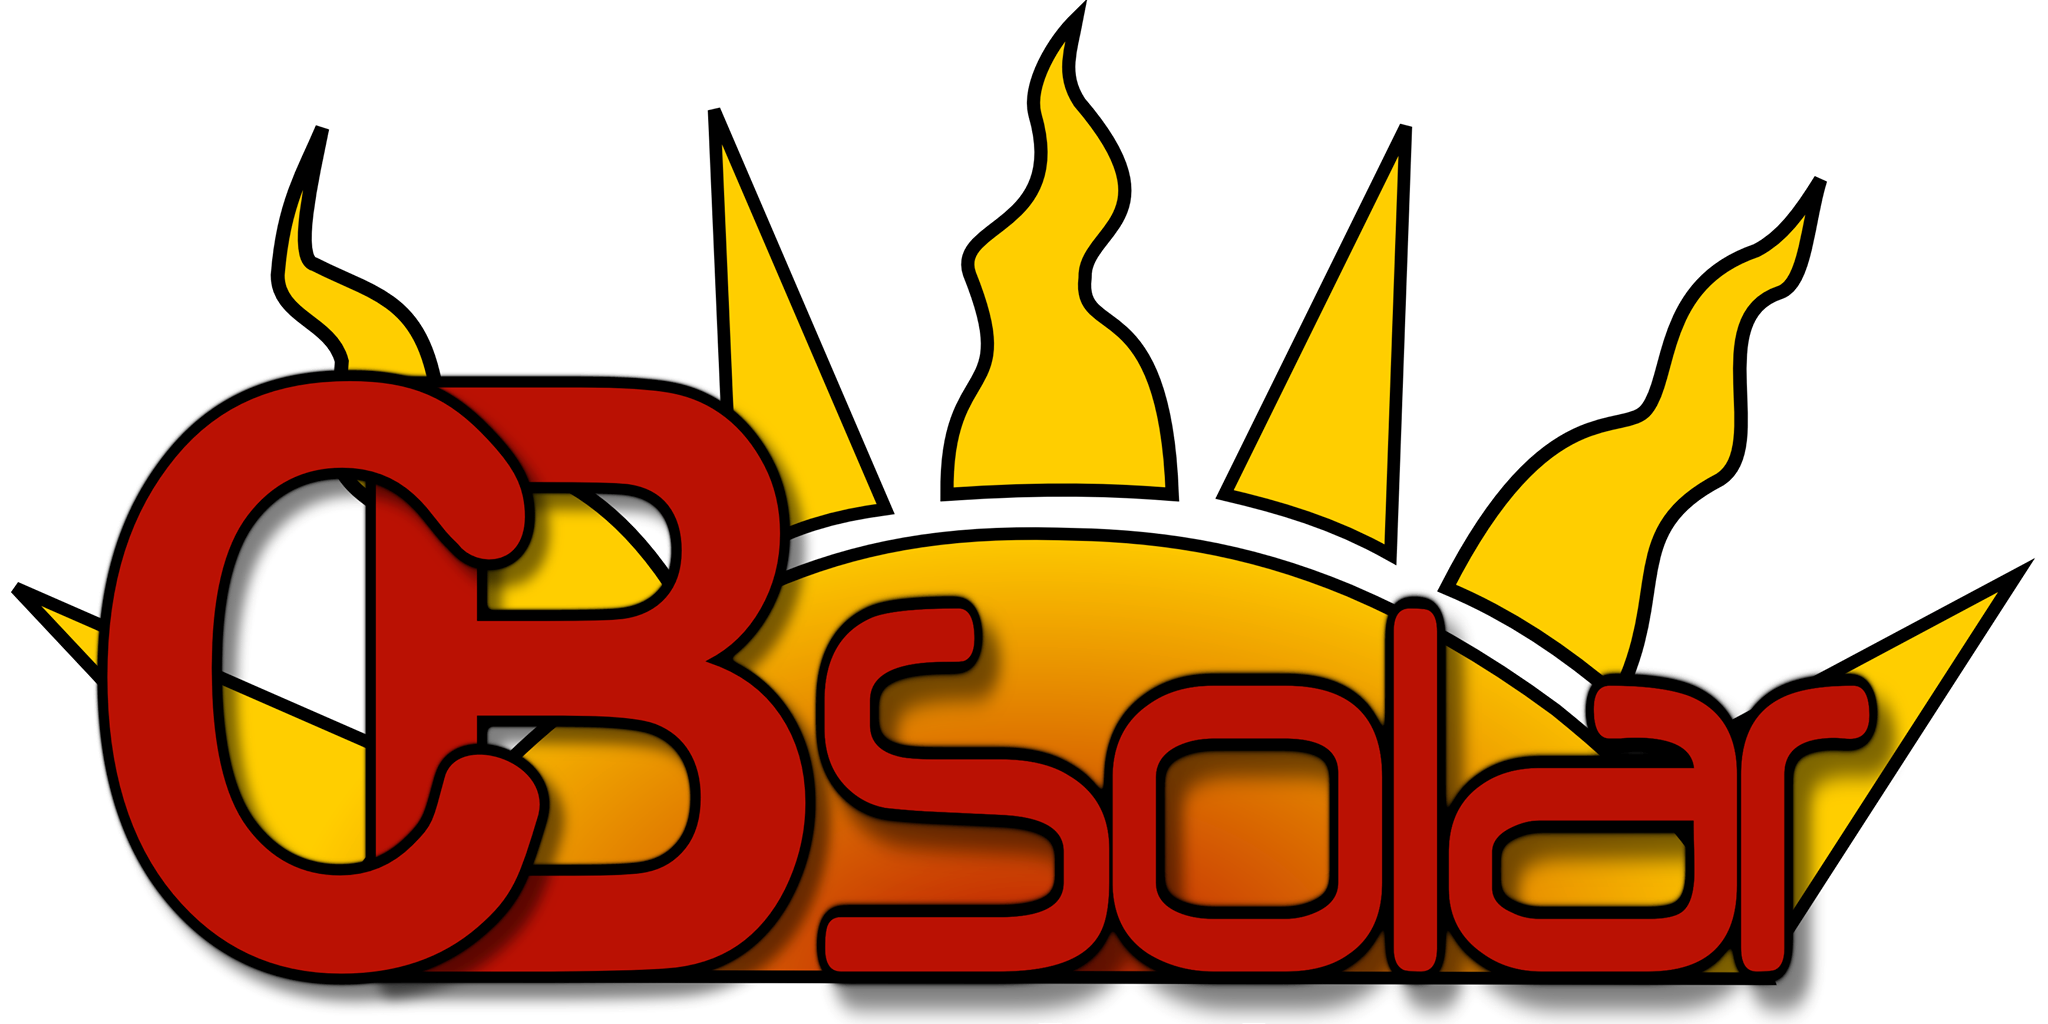 CB Solar logo